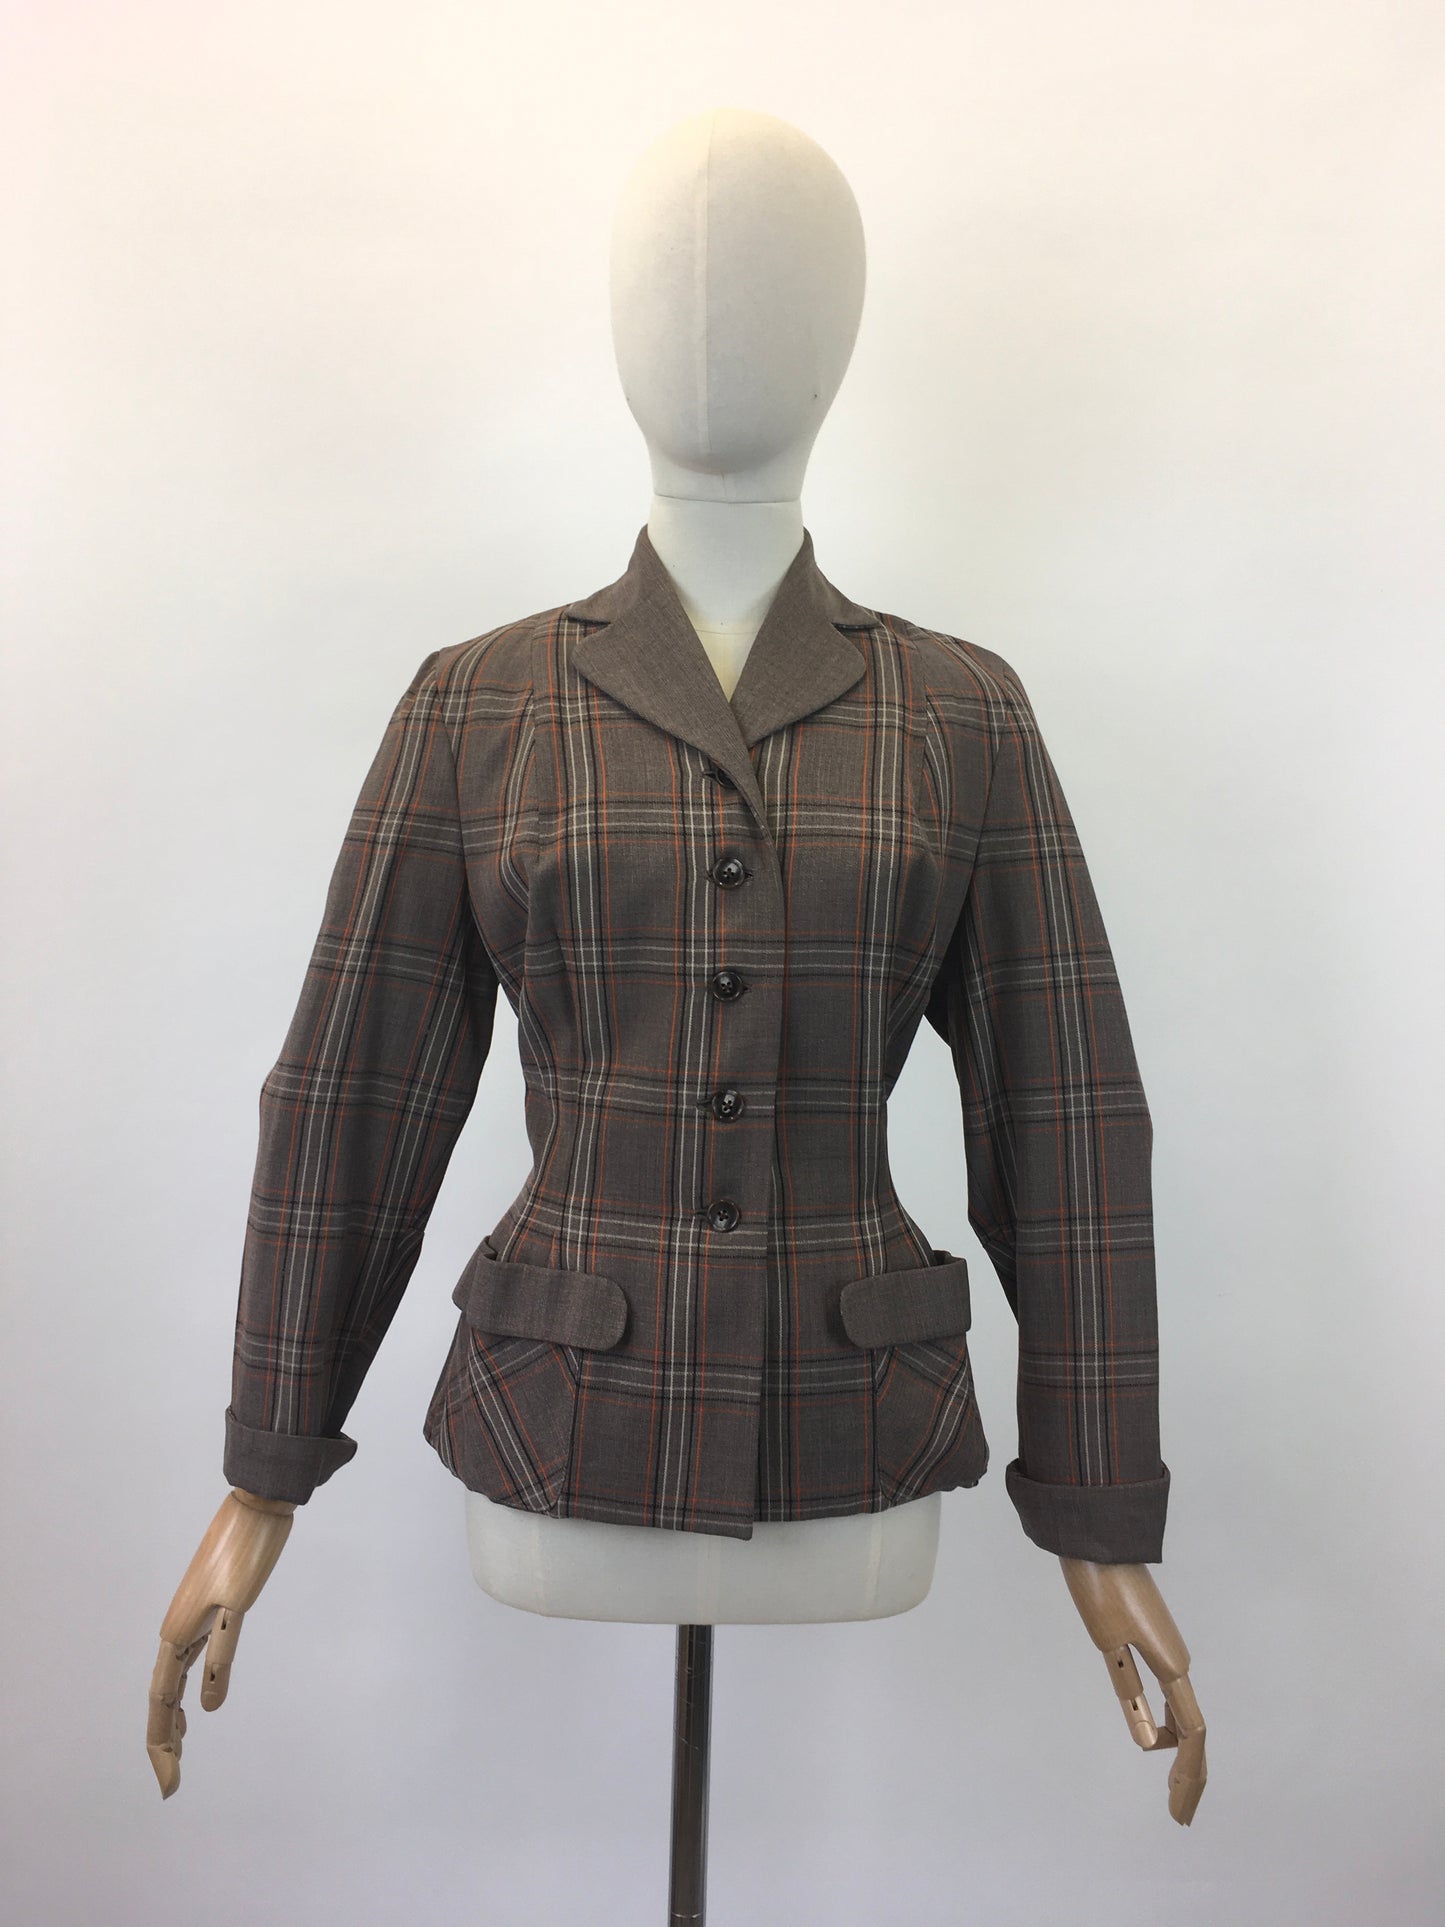 Original 1940's Gorgeous Plaid Jacket - In Brown, Zesty Orange and Cream